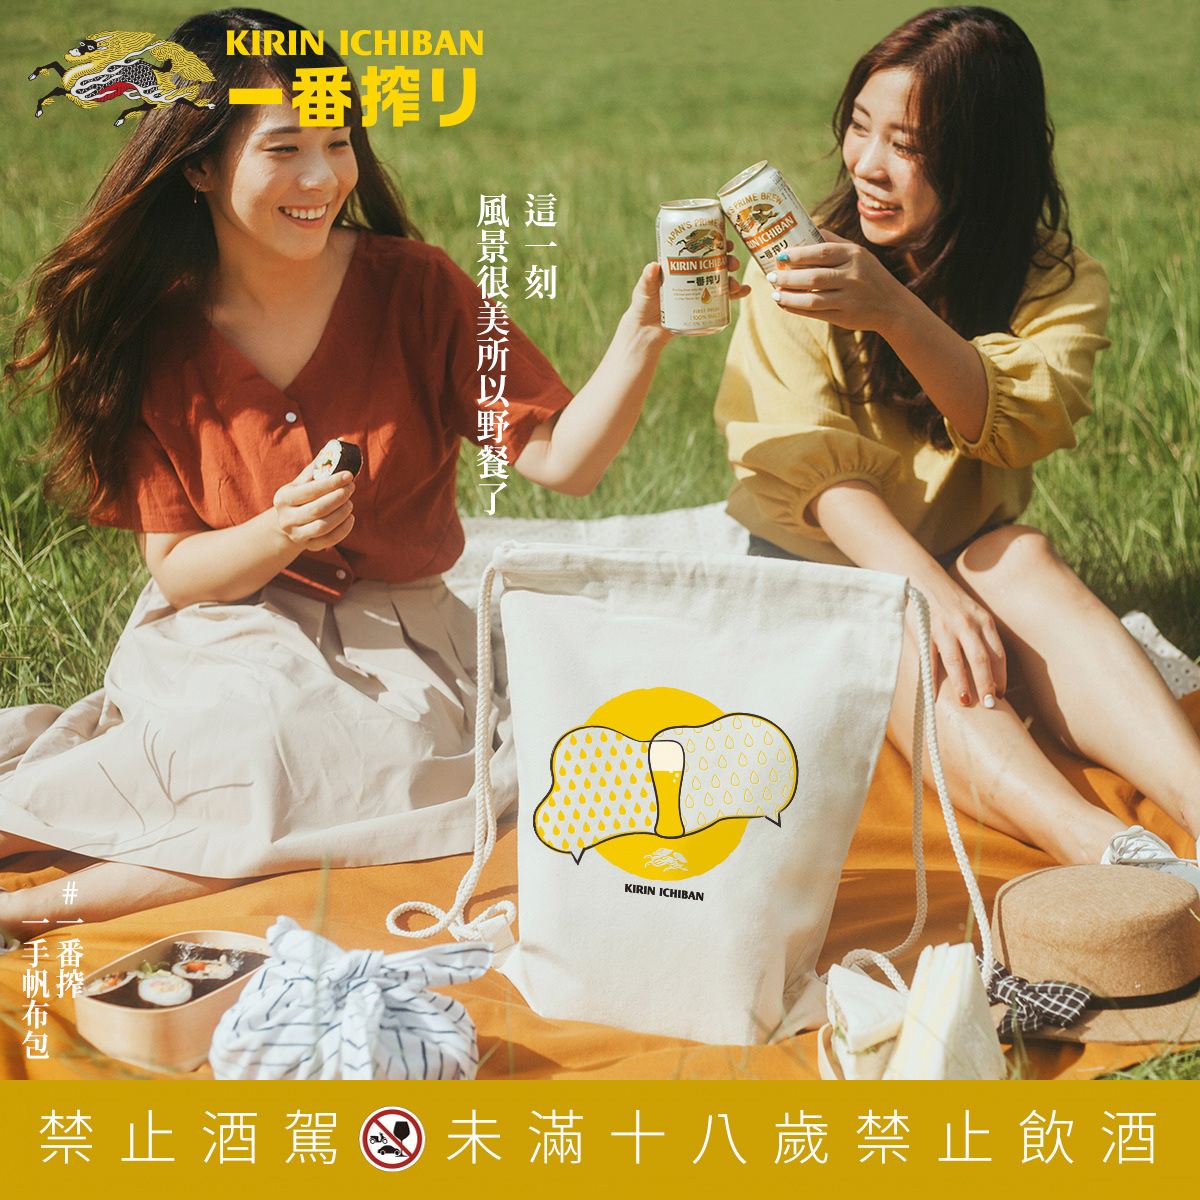 Kirin 一番搾 帆布包 bag cheers beer friend picnic girl Chat